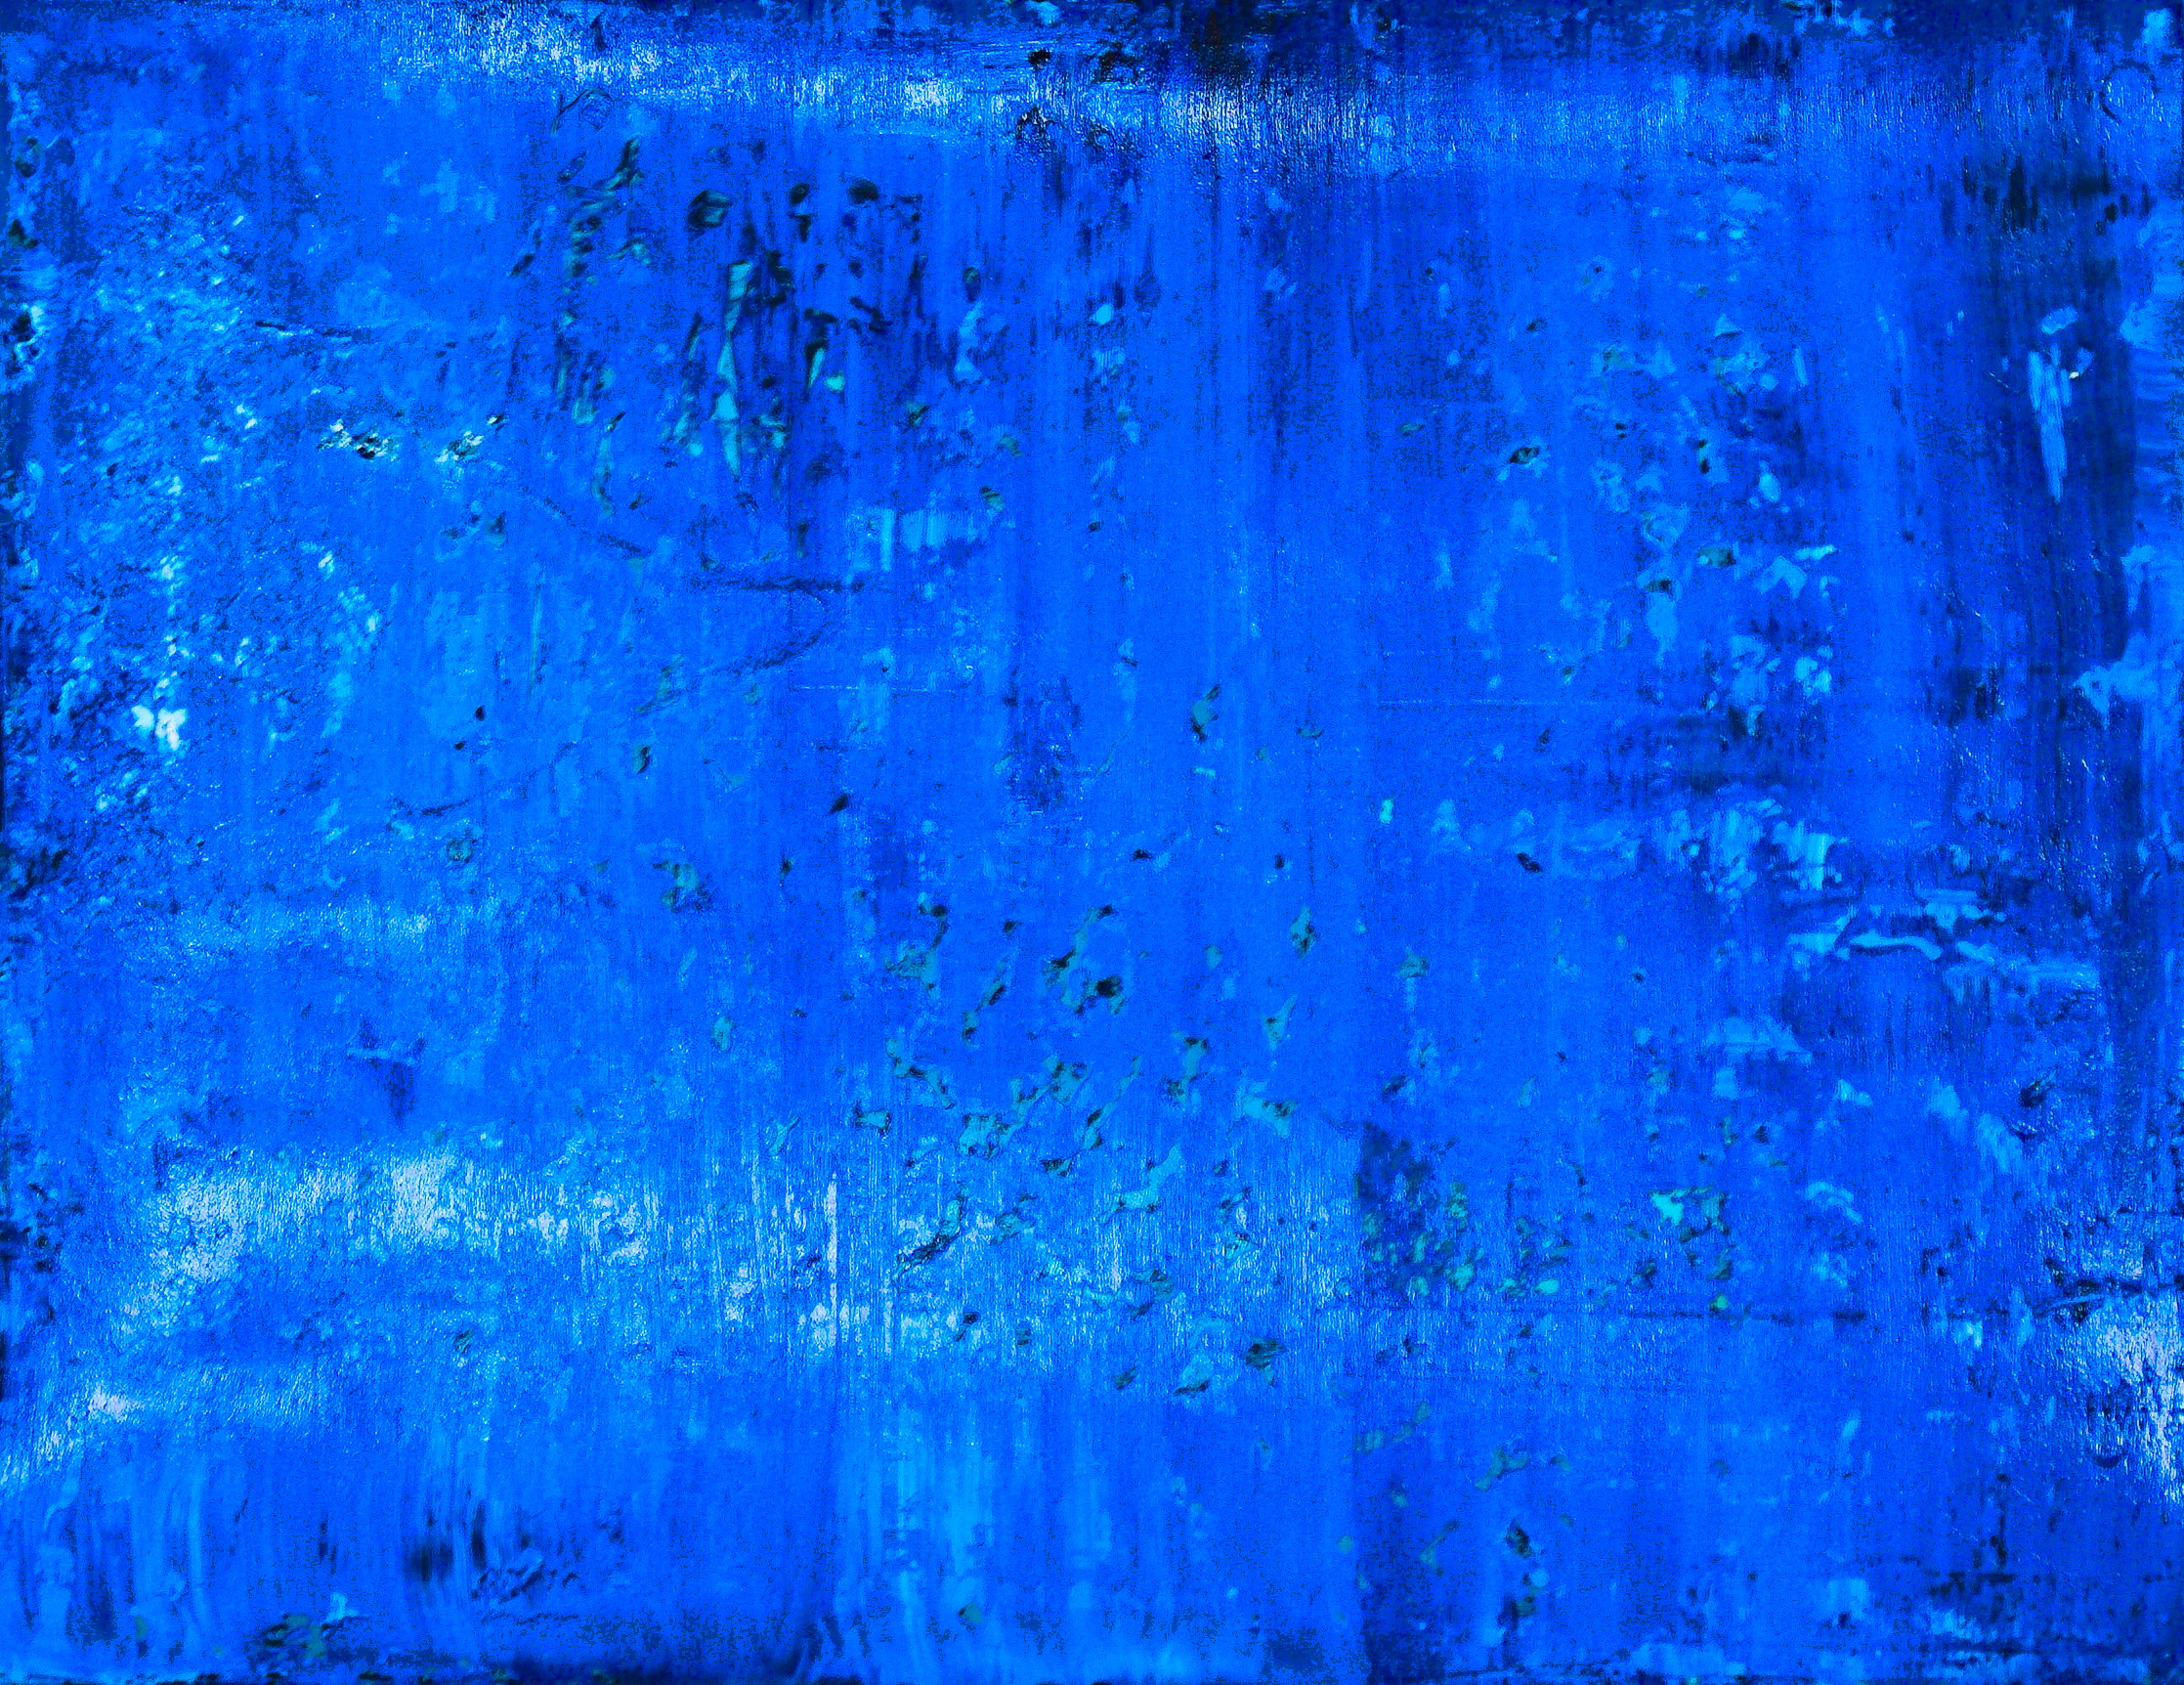 Oil painting - 2018 - Blue 1 - 64 * 50 cm